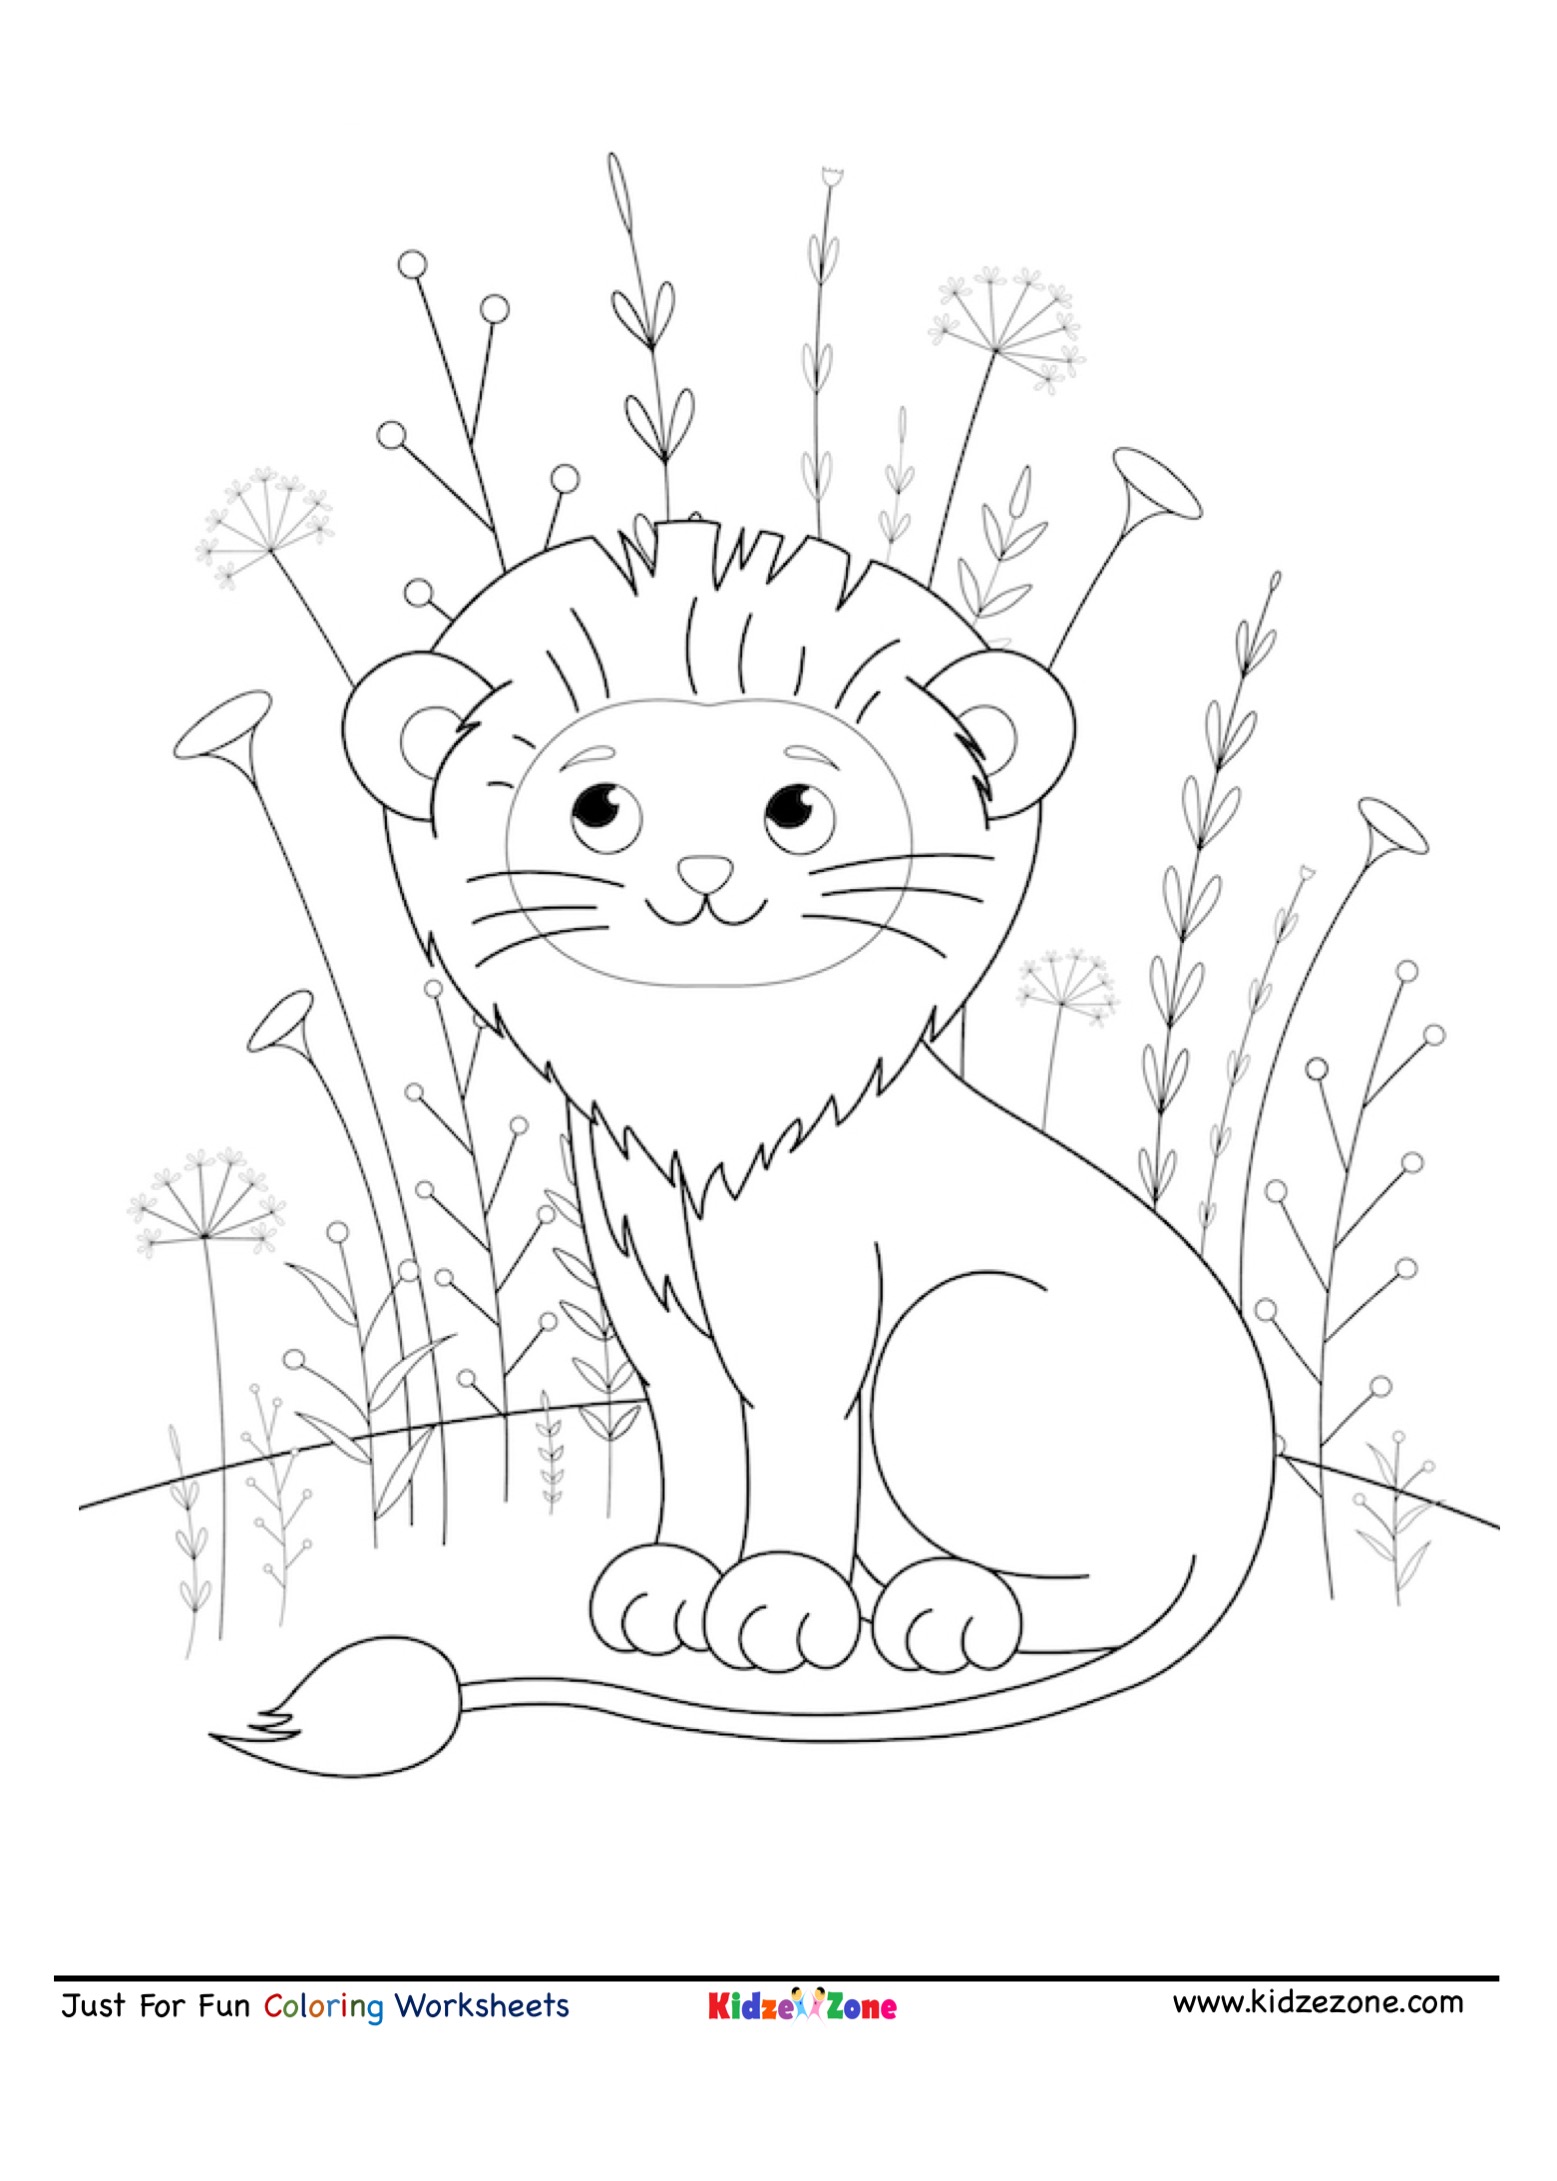 Cute Smiling Lion coloring Page - KidzeZone